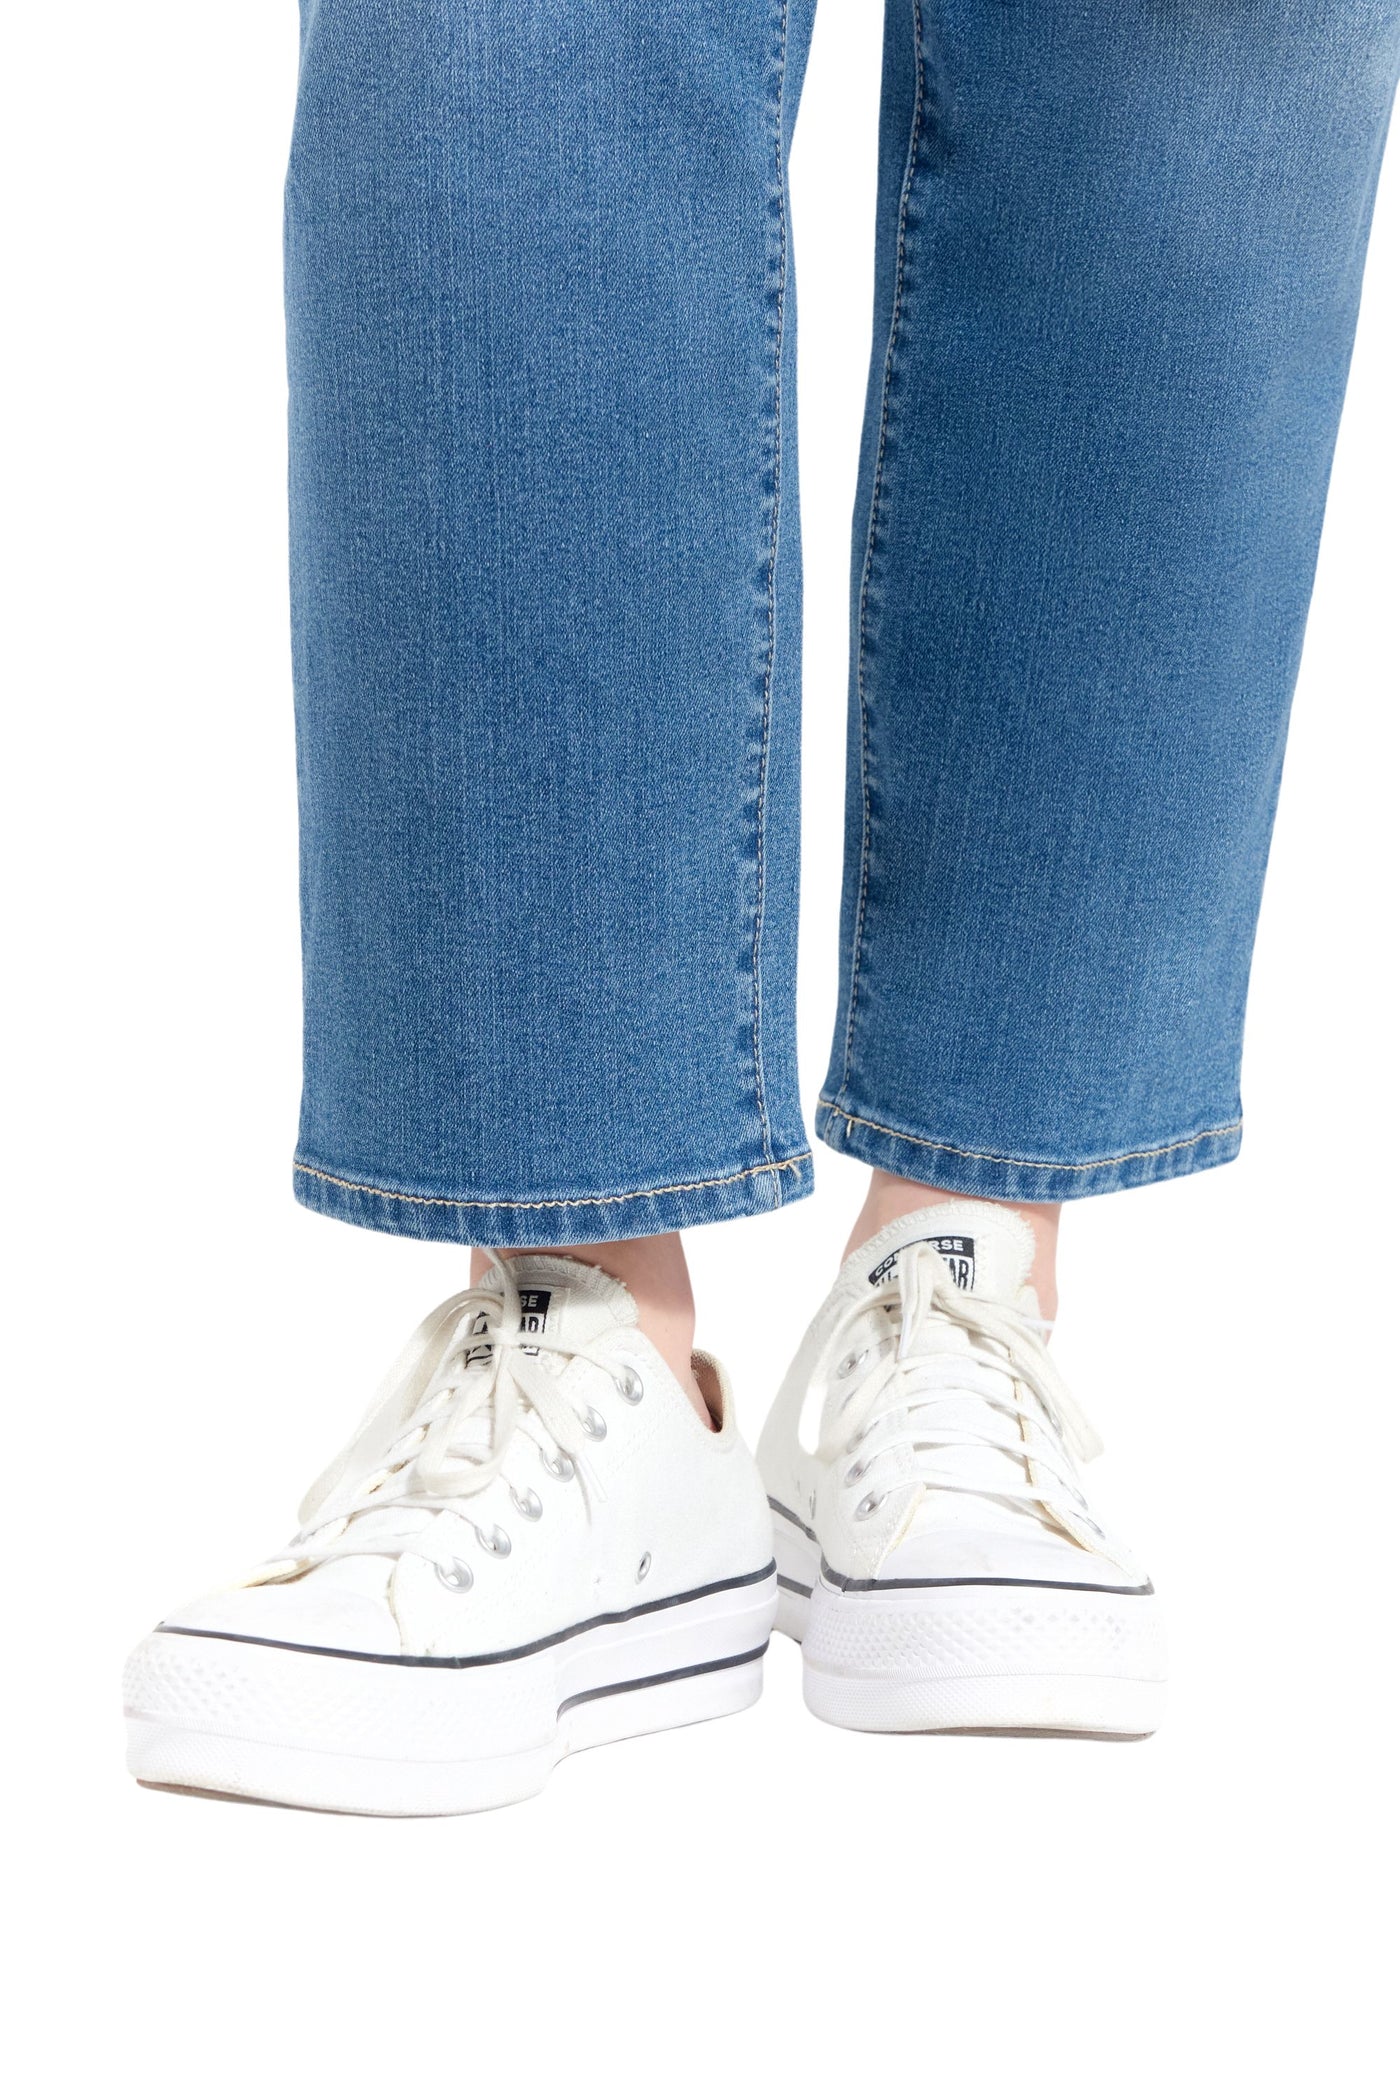 Plus Re:Denim Straight Jeans in Kinsley